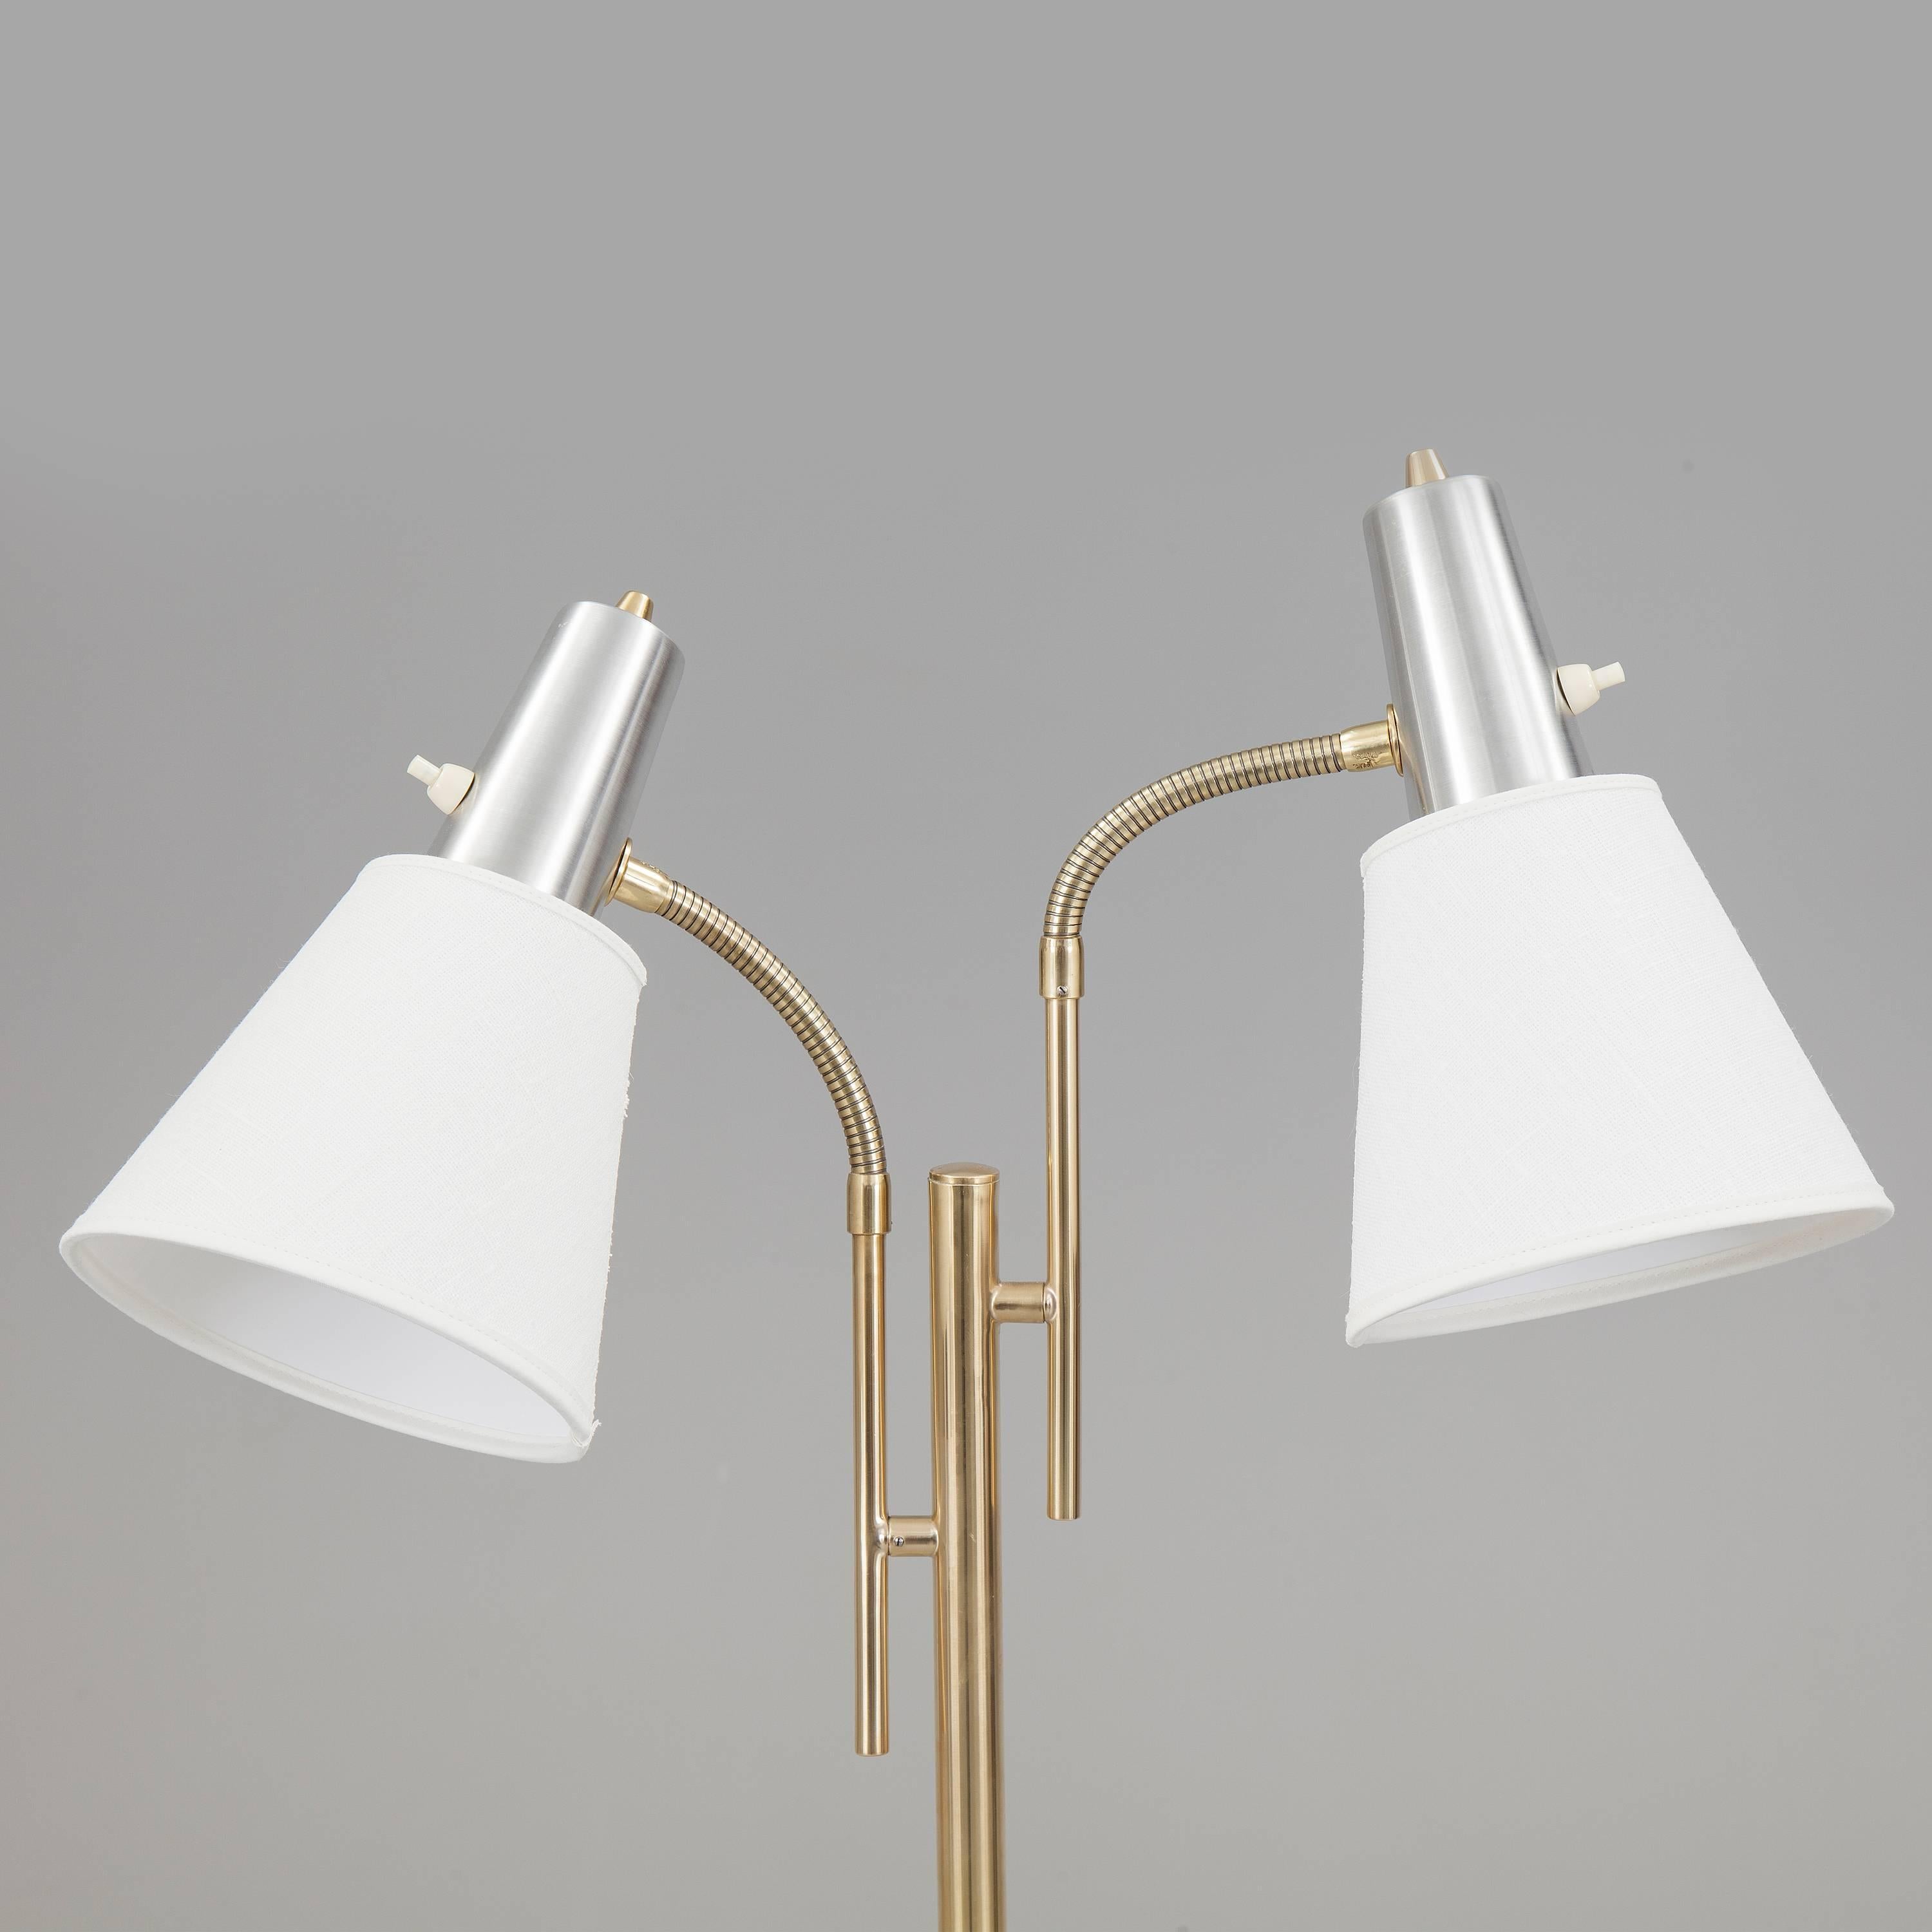 Elegant Modern Swedish floor lamp.
Orientable shade.
Manufactured, circa 1960.
Brass, aluminium, textile shade.